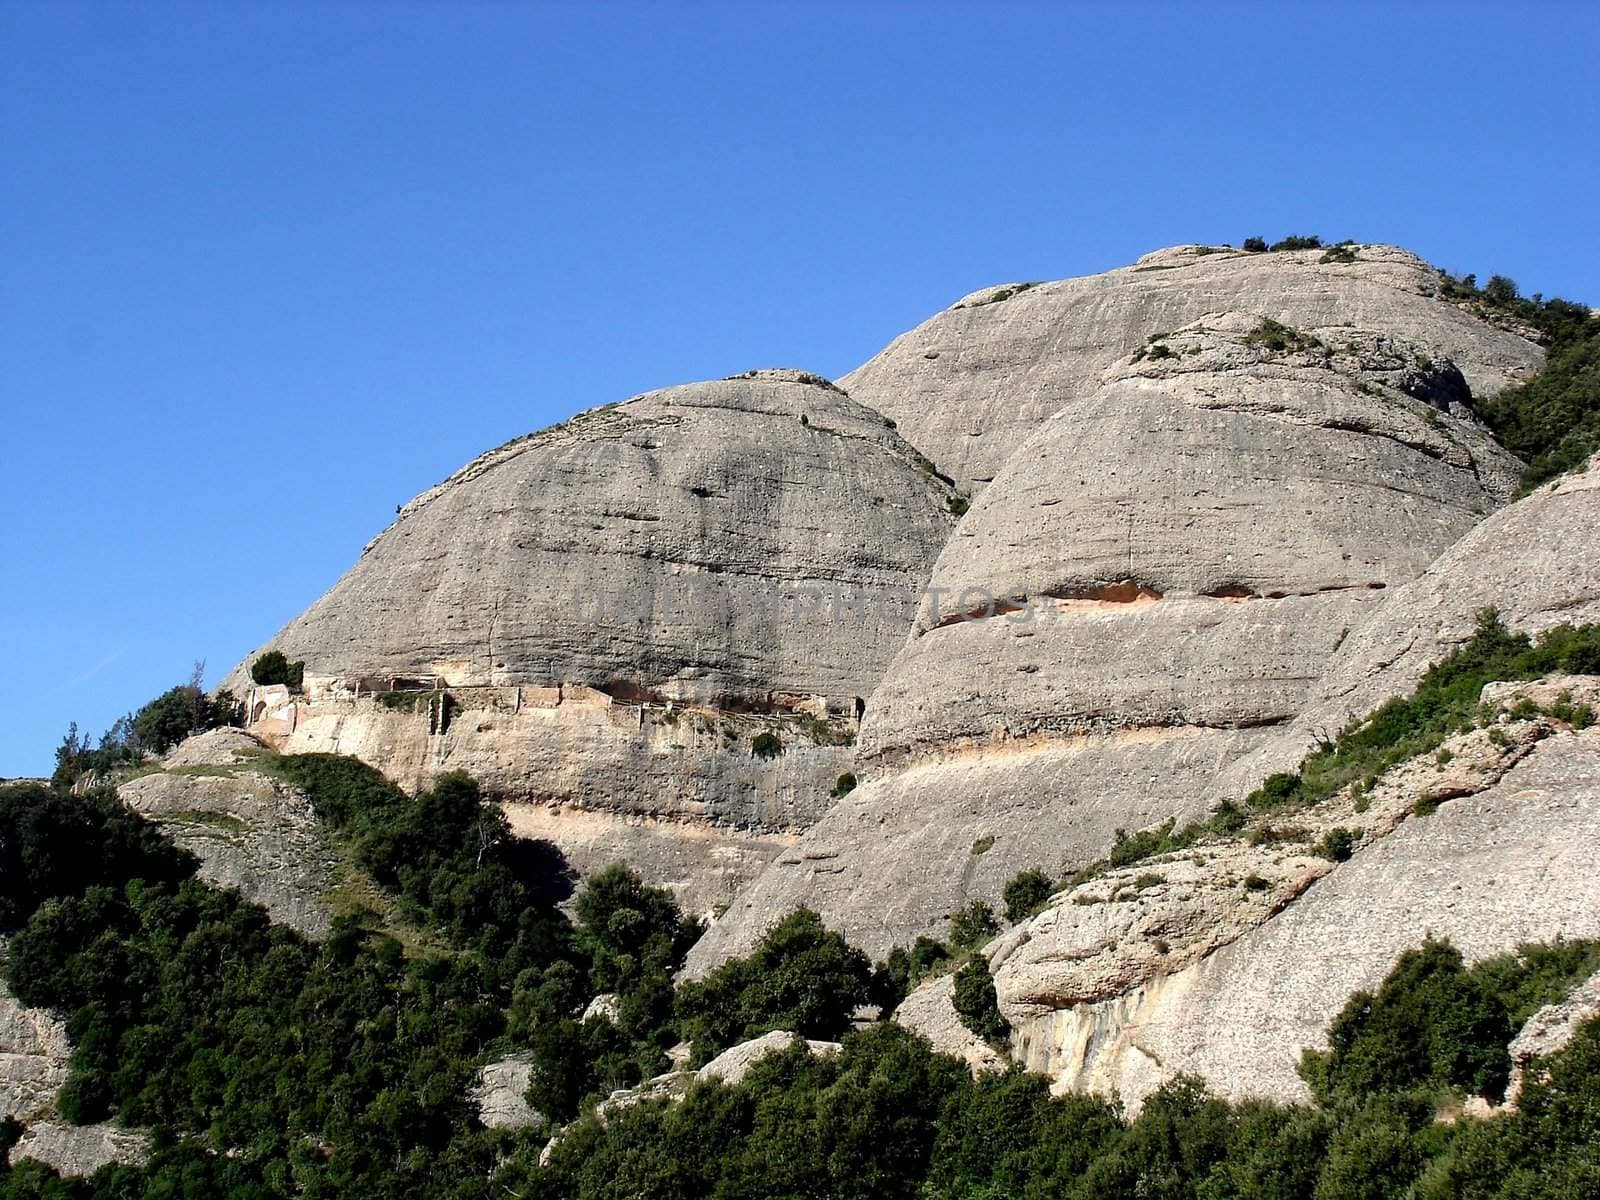 View of Sant Joan mountain at Montserrat abbey